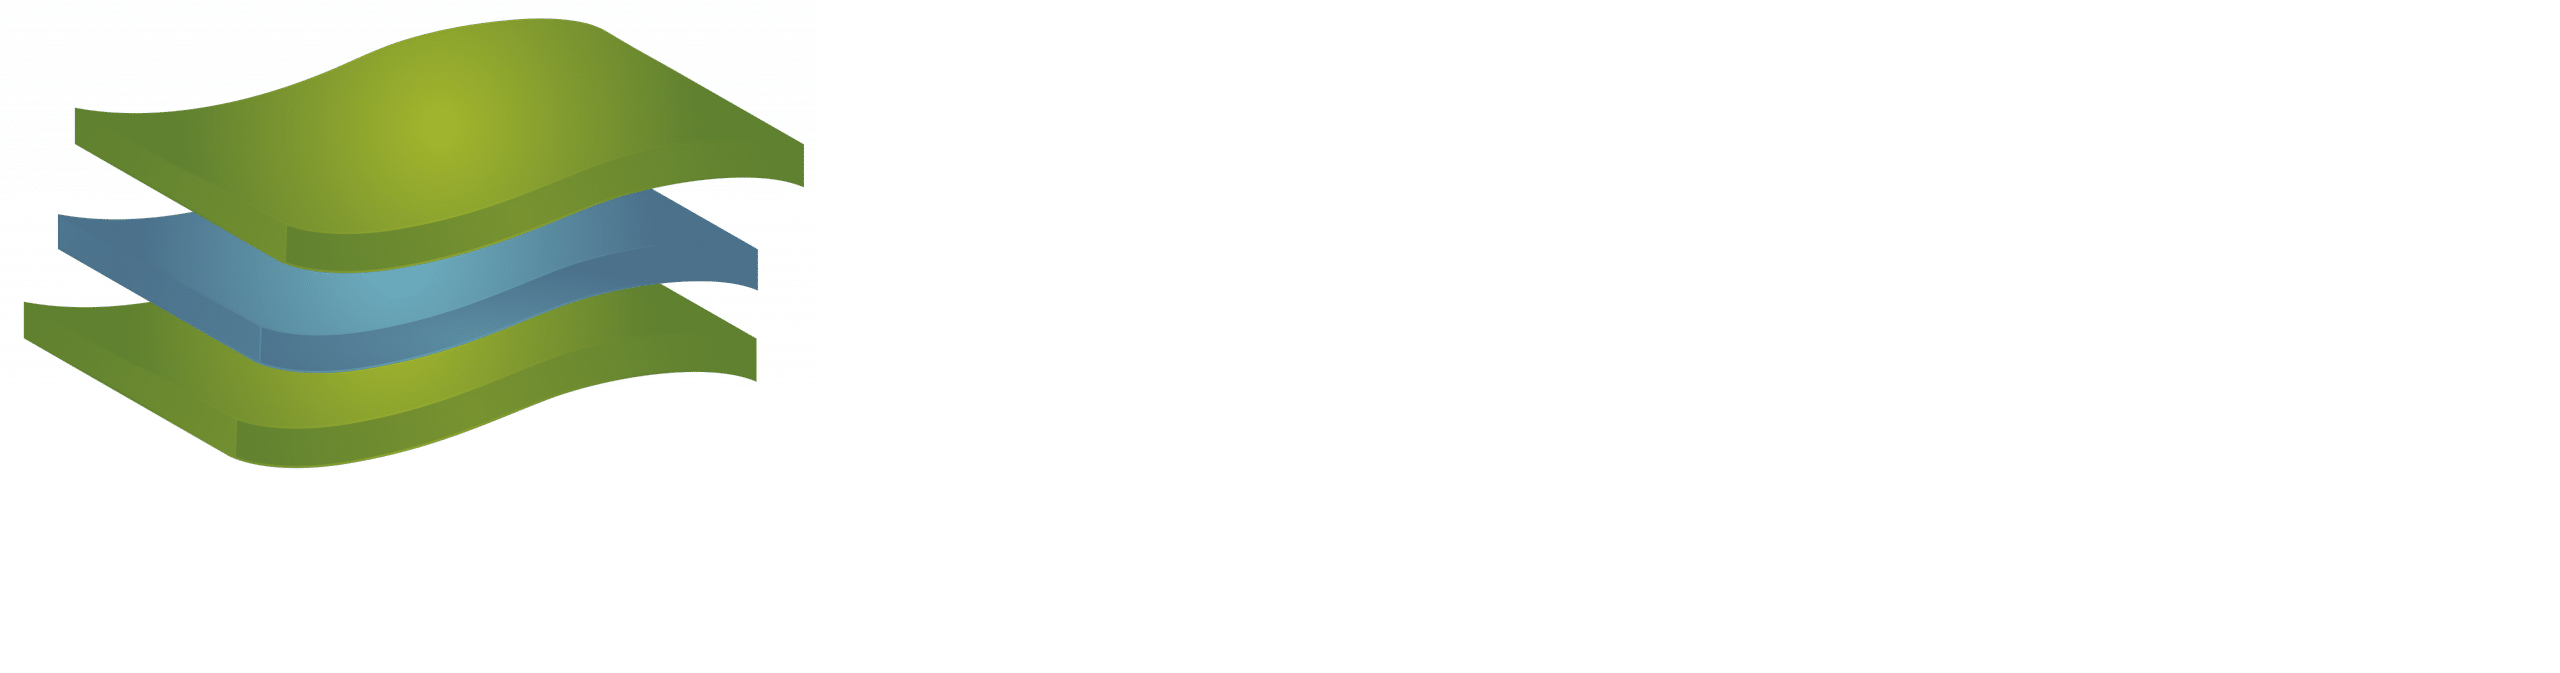 Logo-Centimp-Horizontal-Productos-Blanco